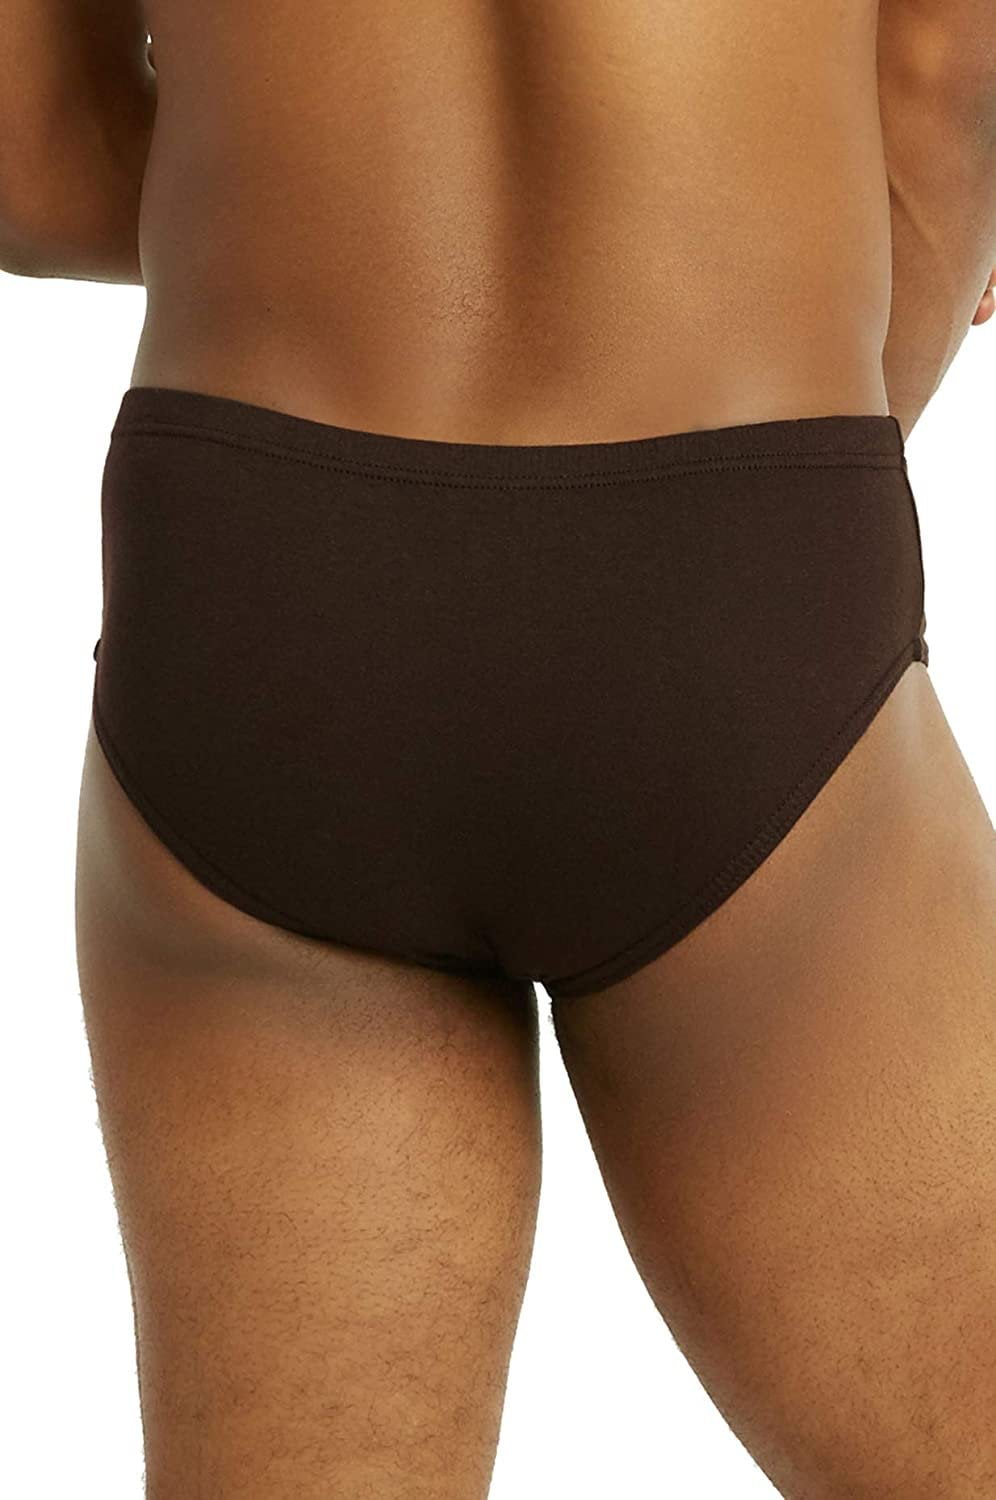 RIO Mens Briefs Small 10 Pack Breathable Cotton Undies Underwear Blue Grey S 